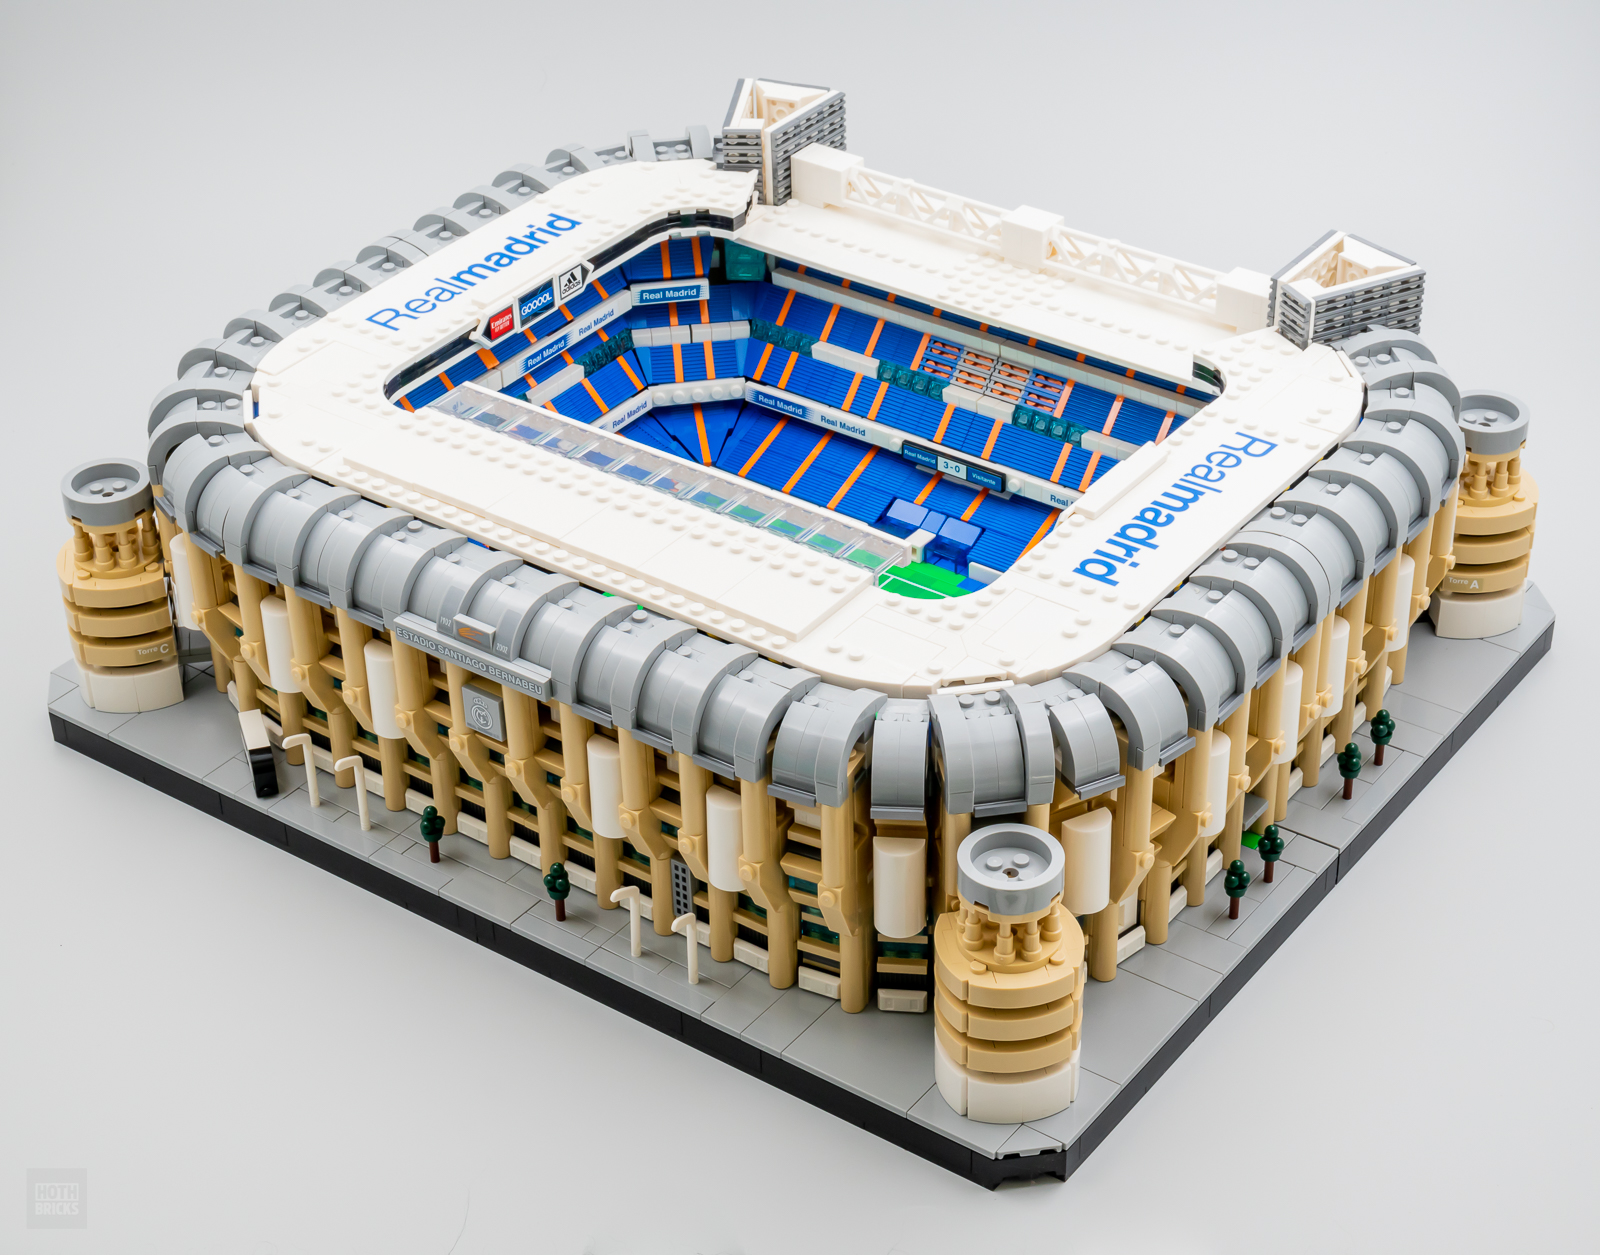 LEGO To Launch Its Real Madrid Santiago Bernabéu Stadium - IMBOLDN